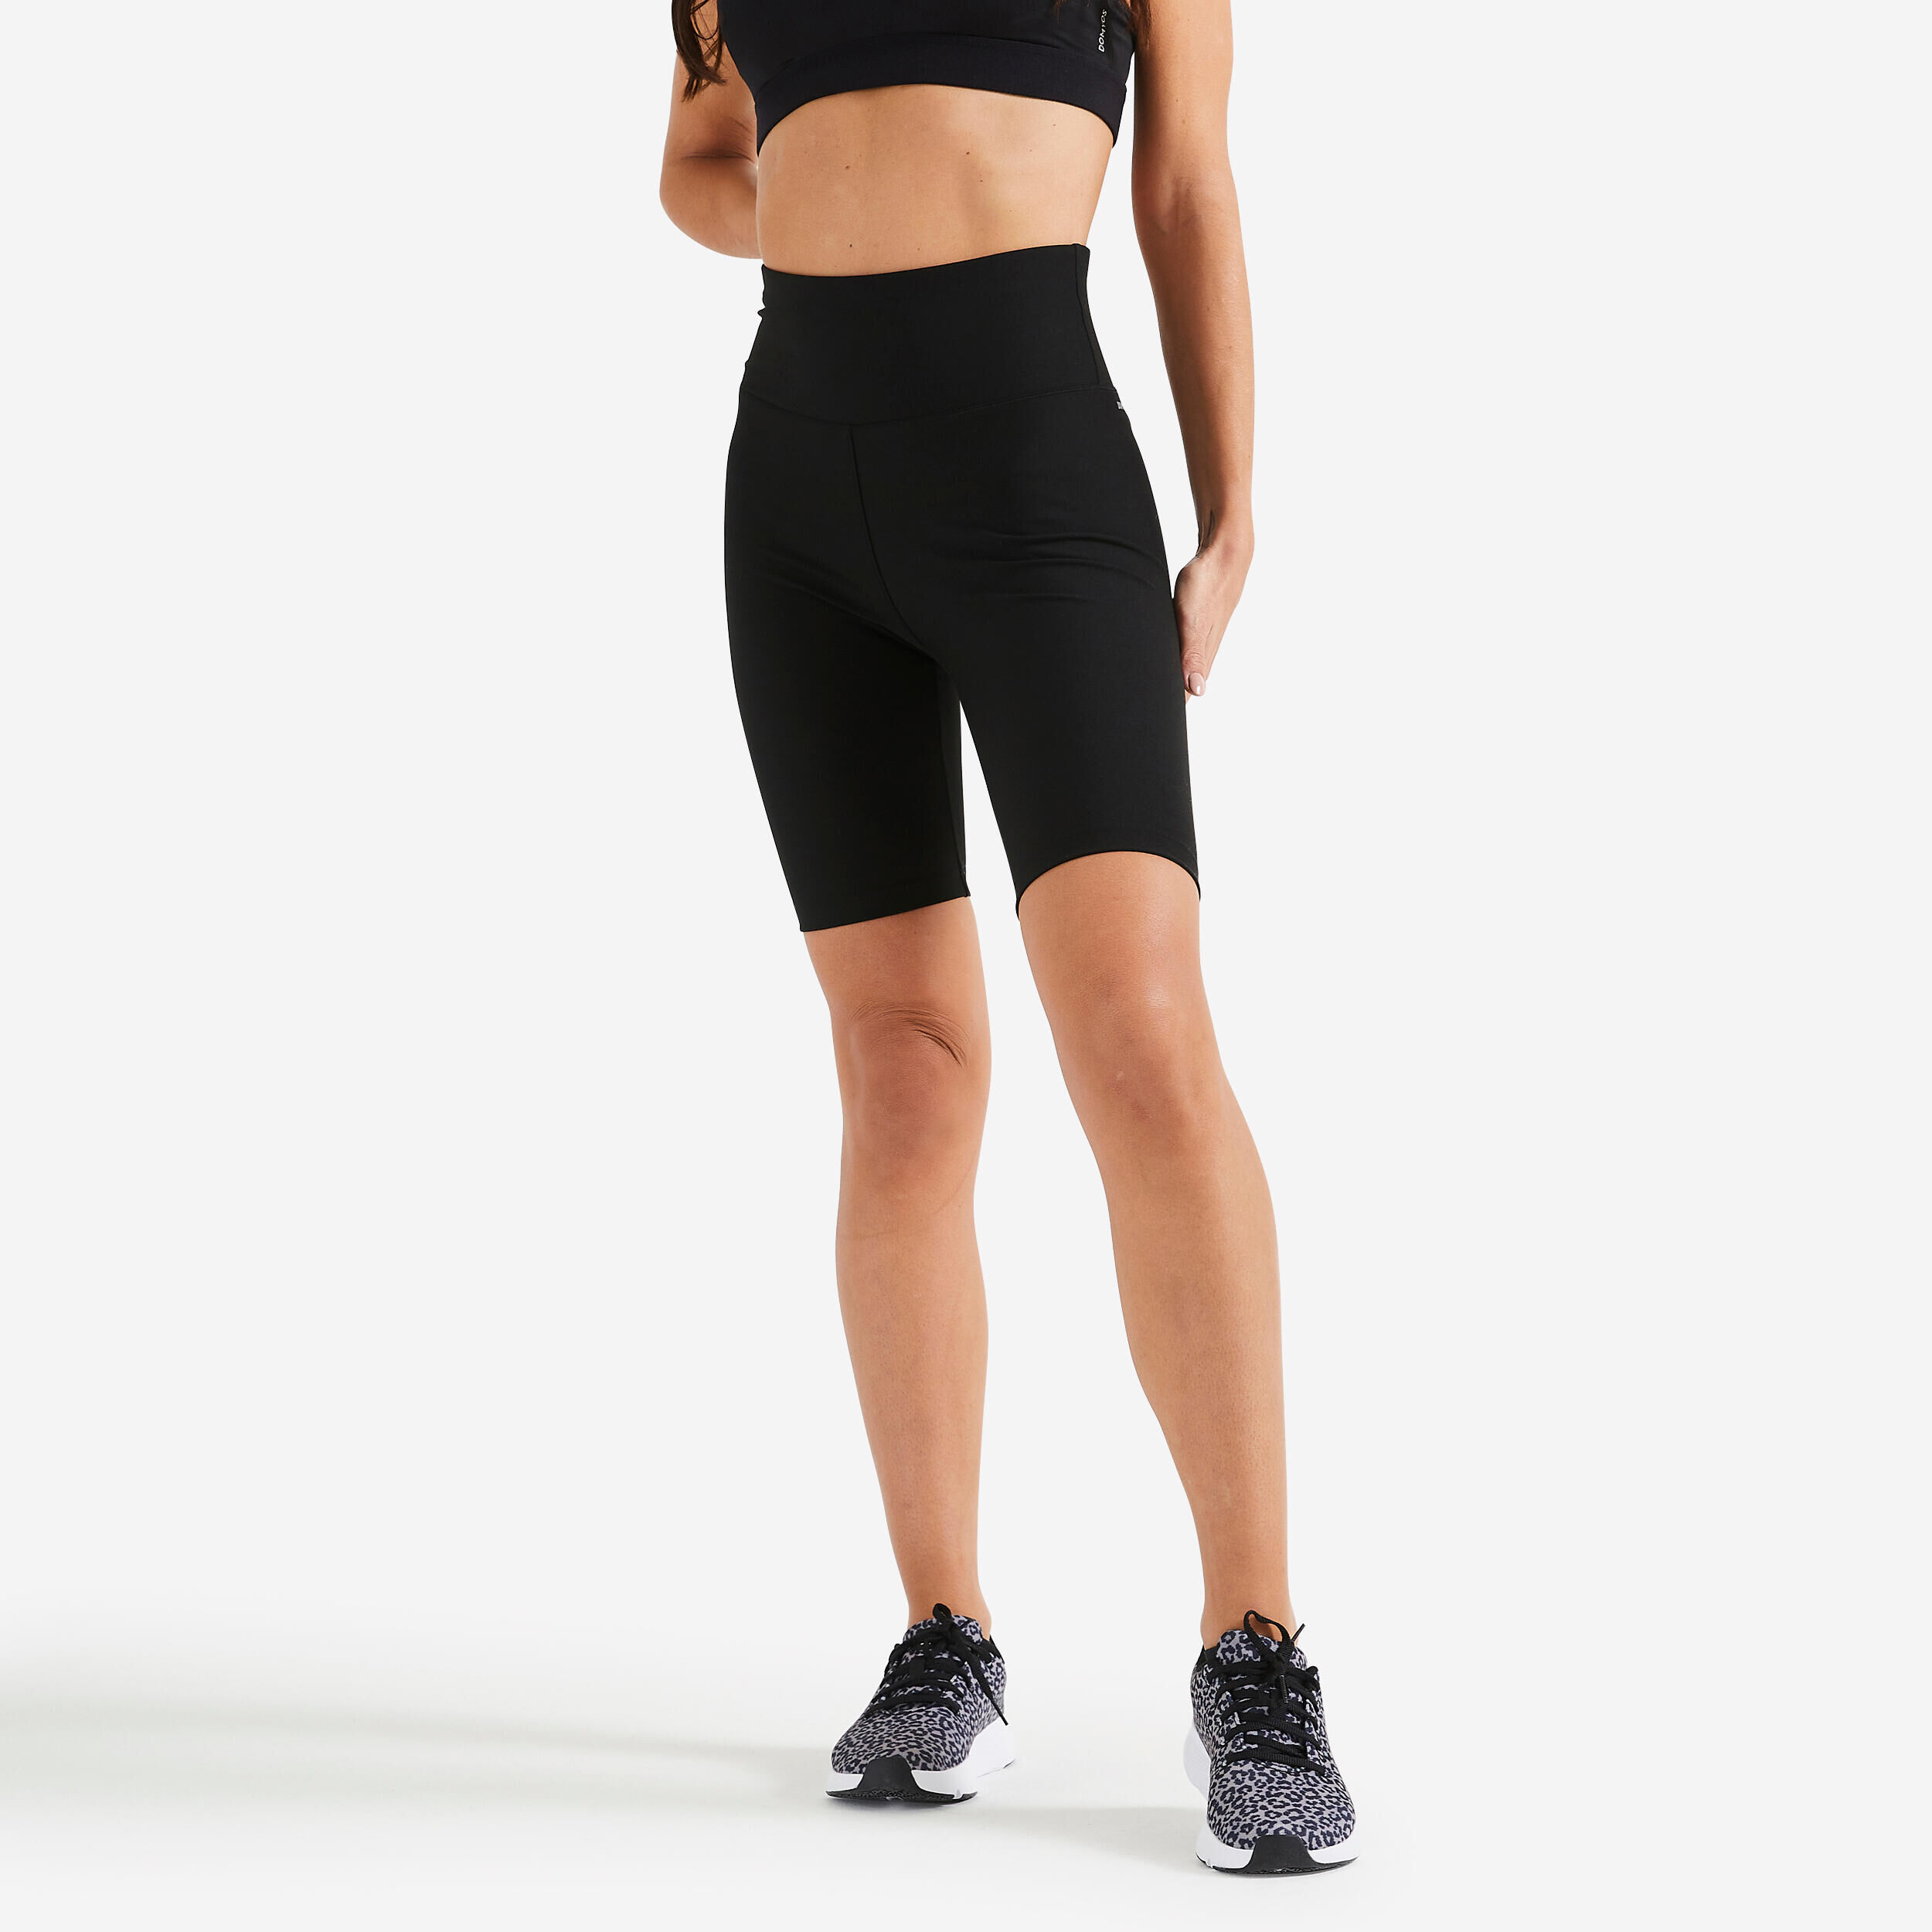 DOMYOS Women's High-Waisted Fitness Cardio Cycling Shorts - Black